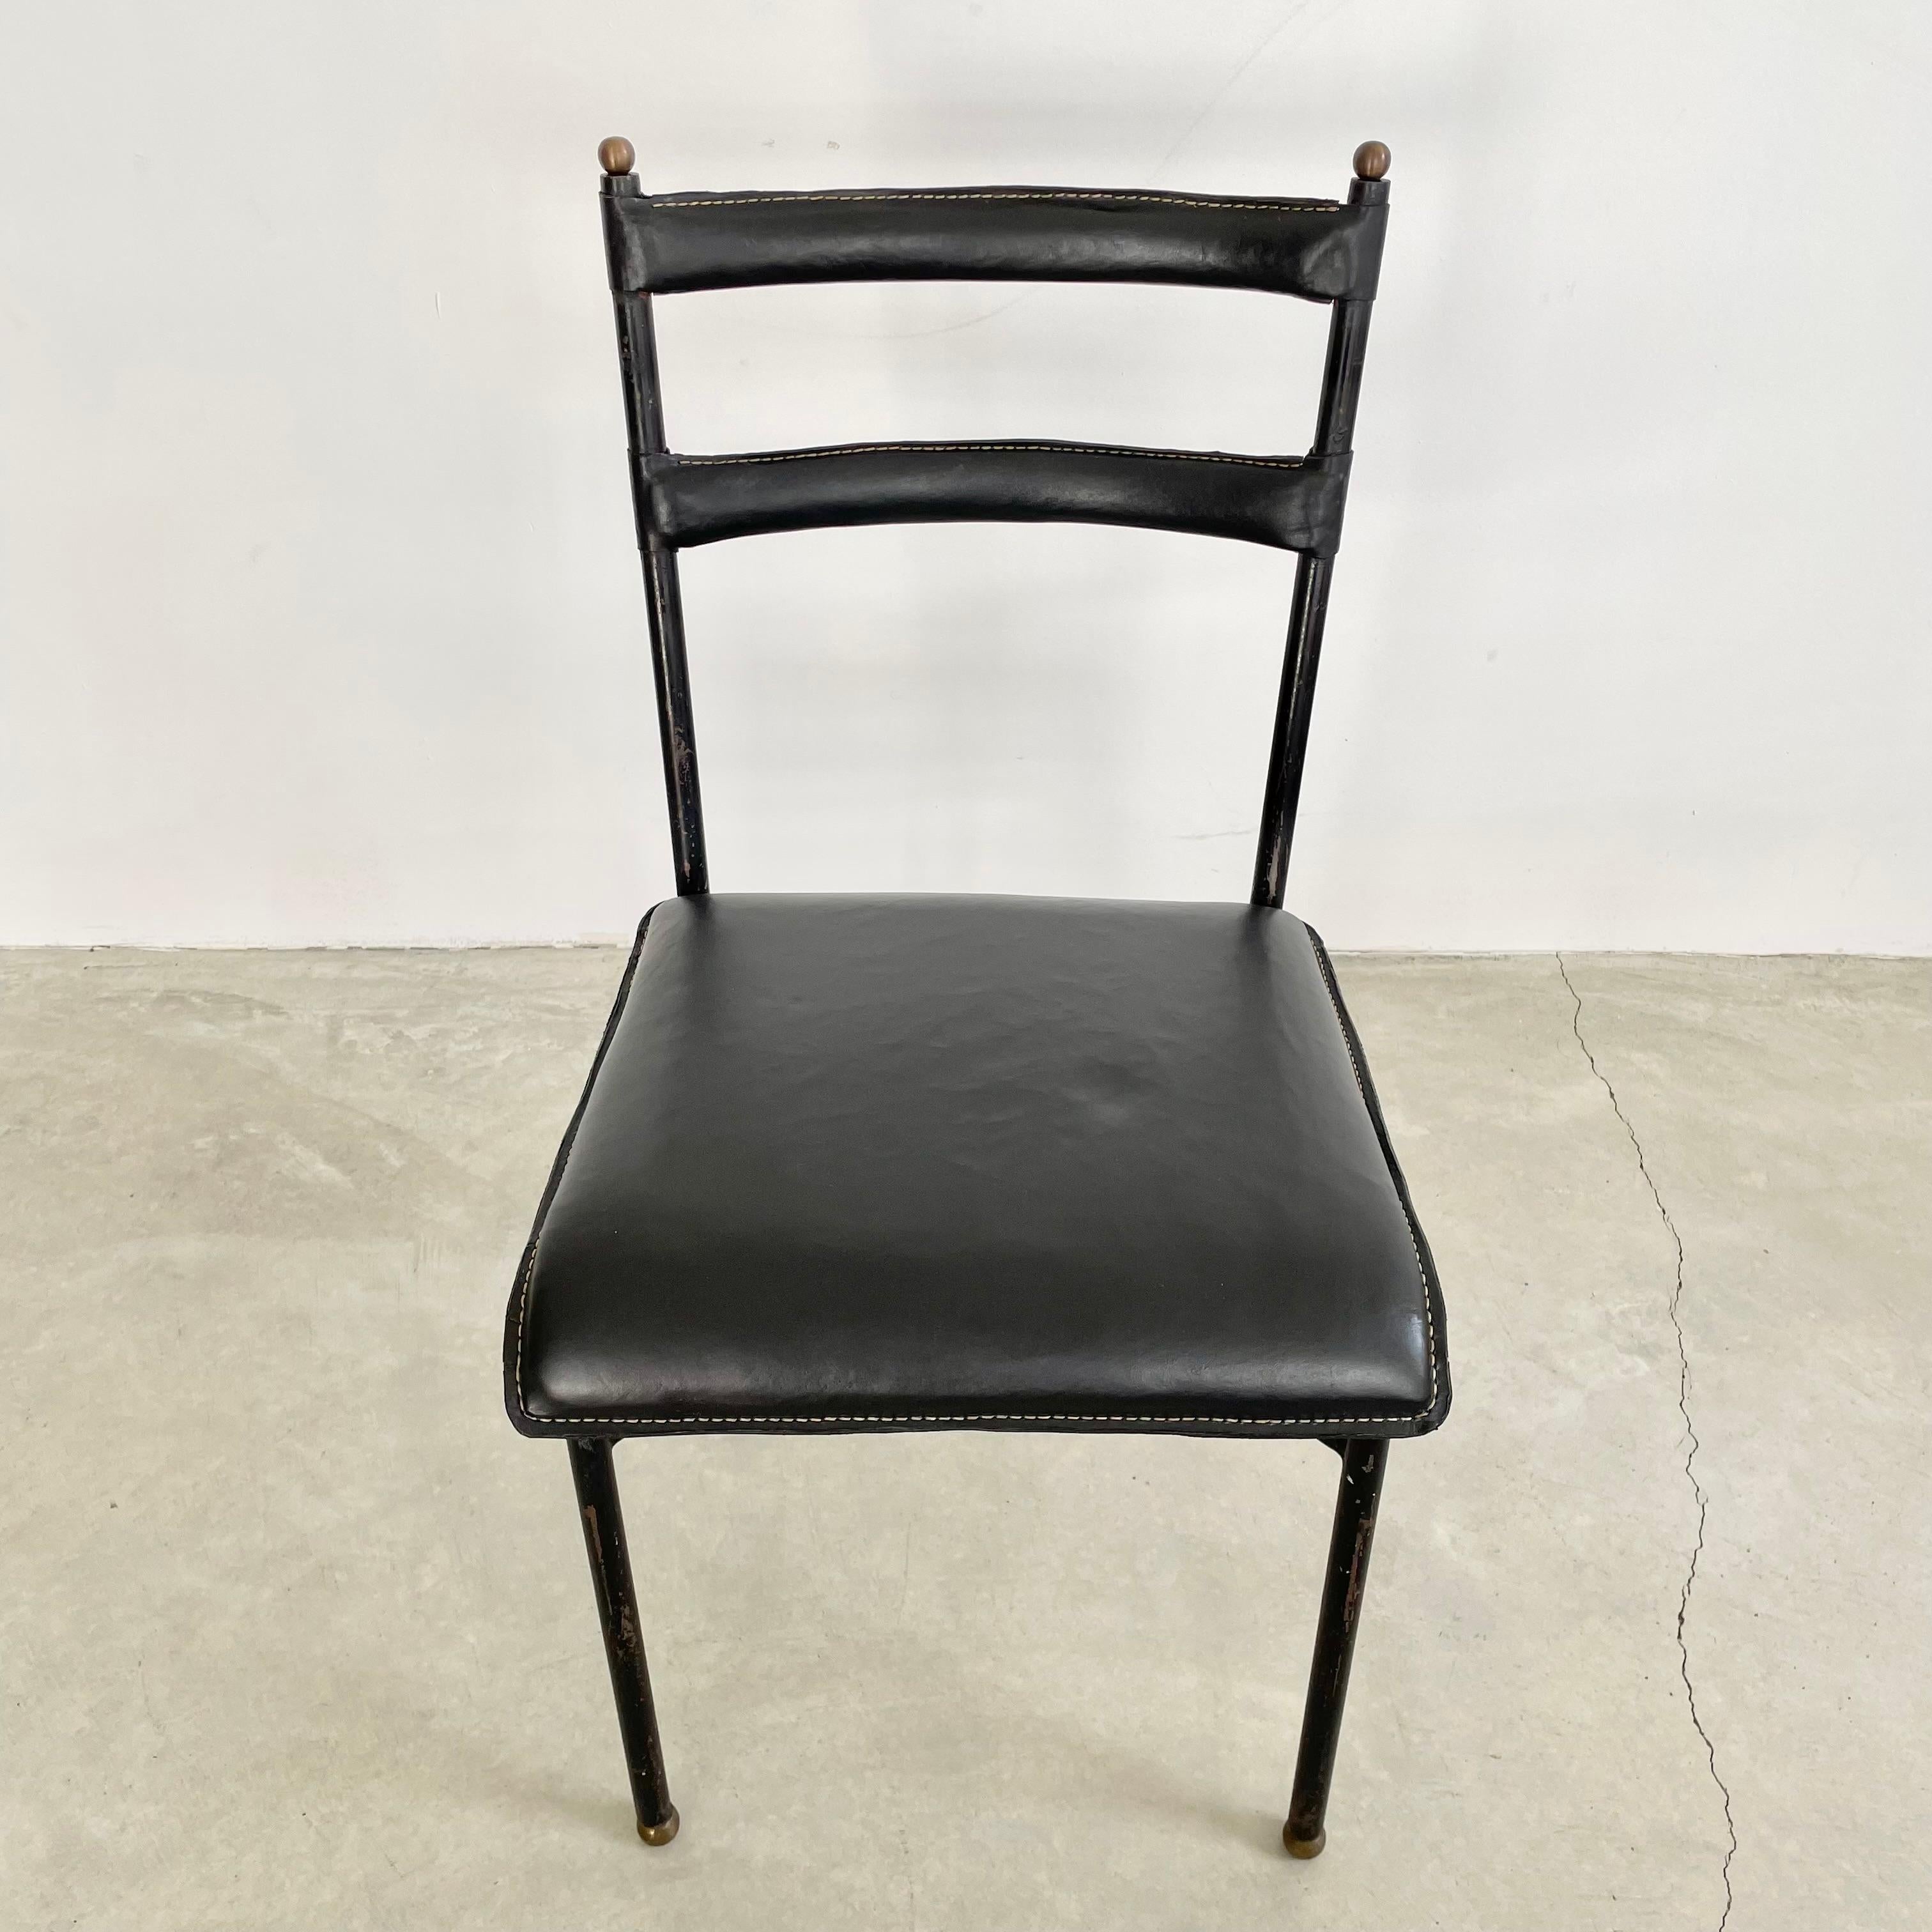 Jacques Adnet, Stuhl aus schwarzem Leder, 1950er-Jahre, Frankreich (Art déco) im Angebot